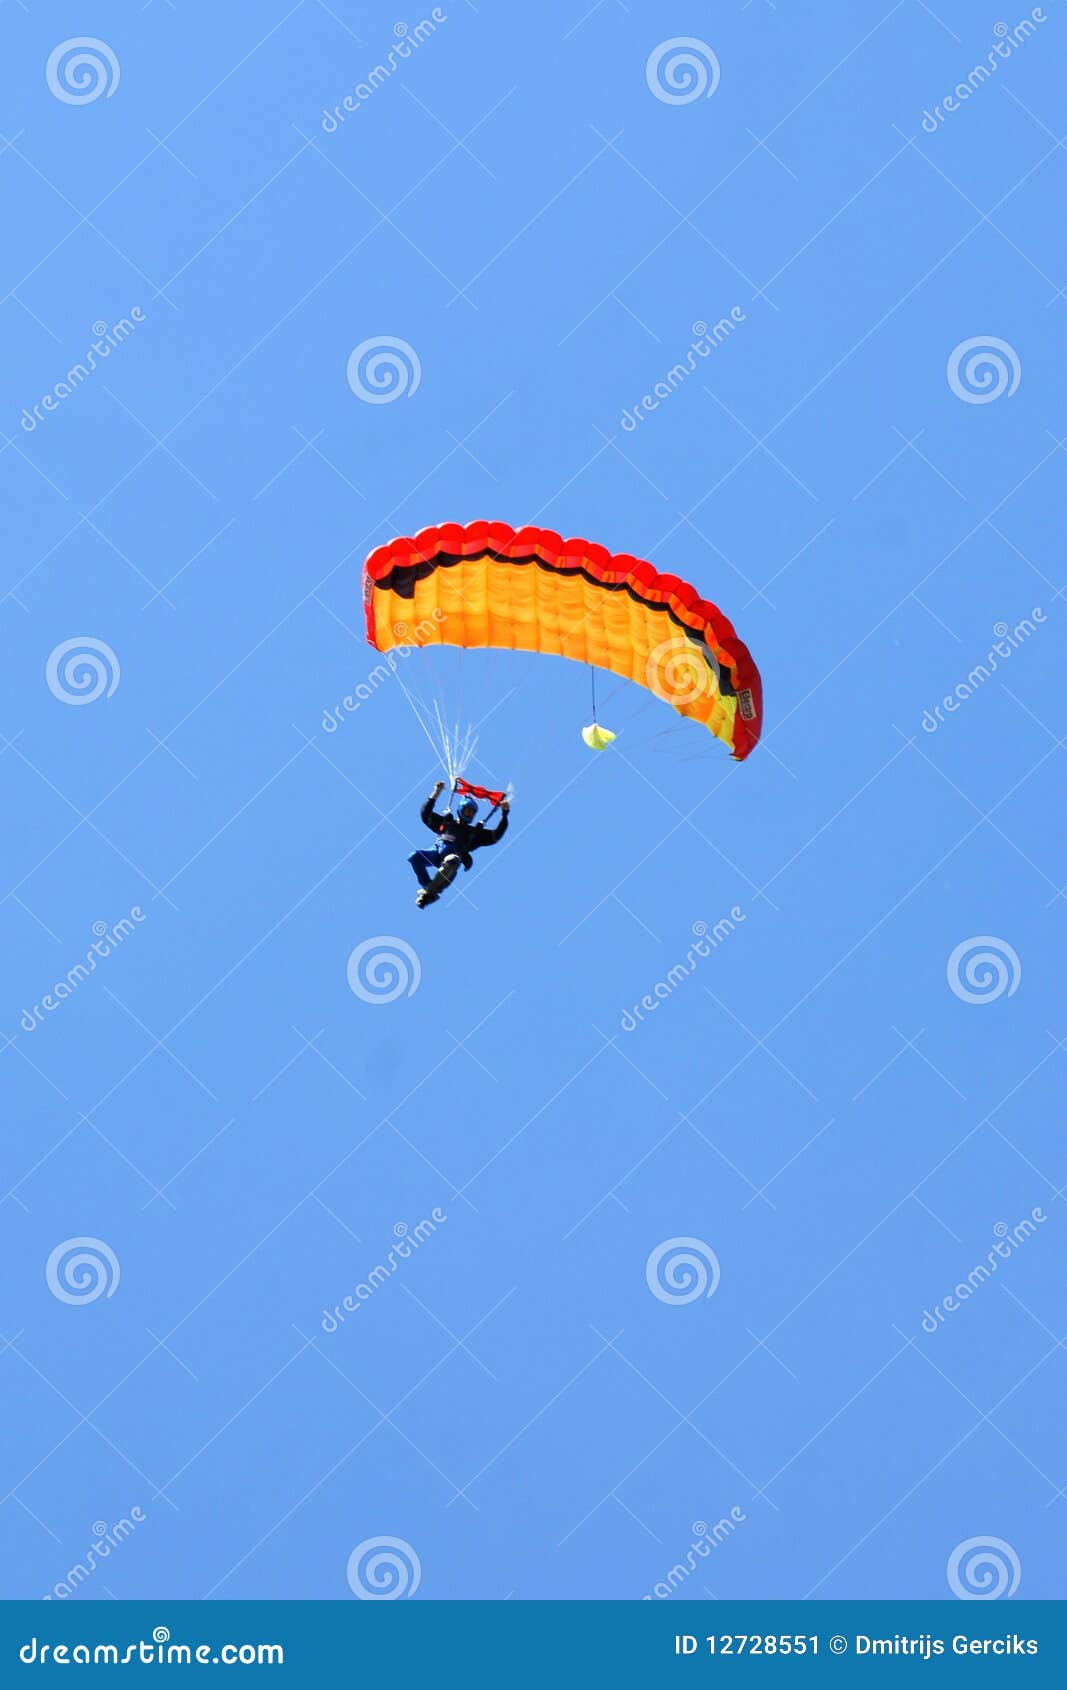 extreme sports. parachuting